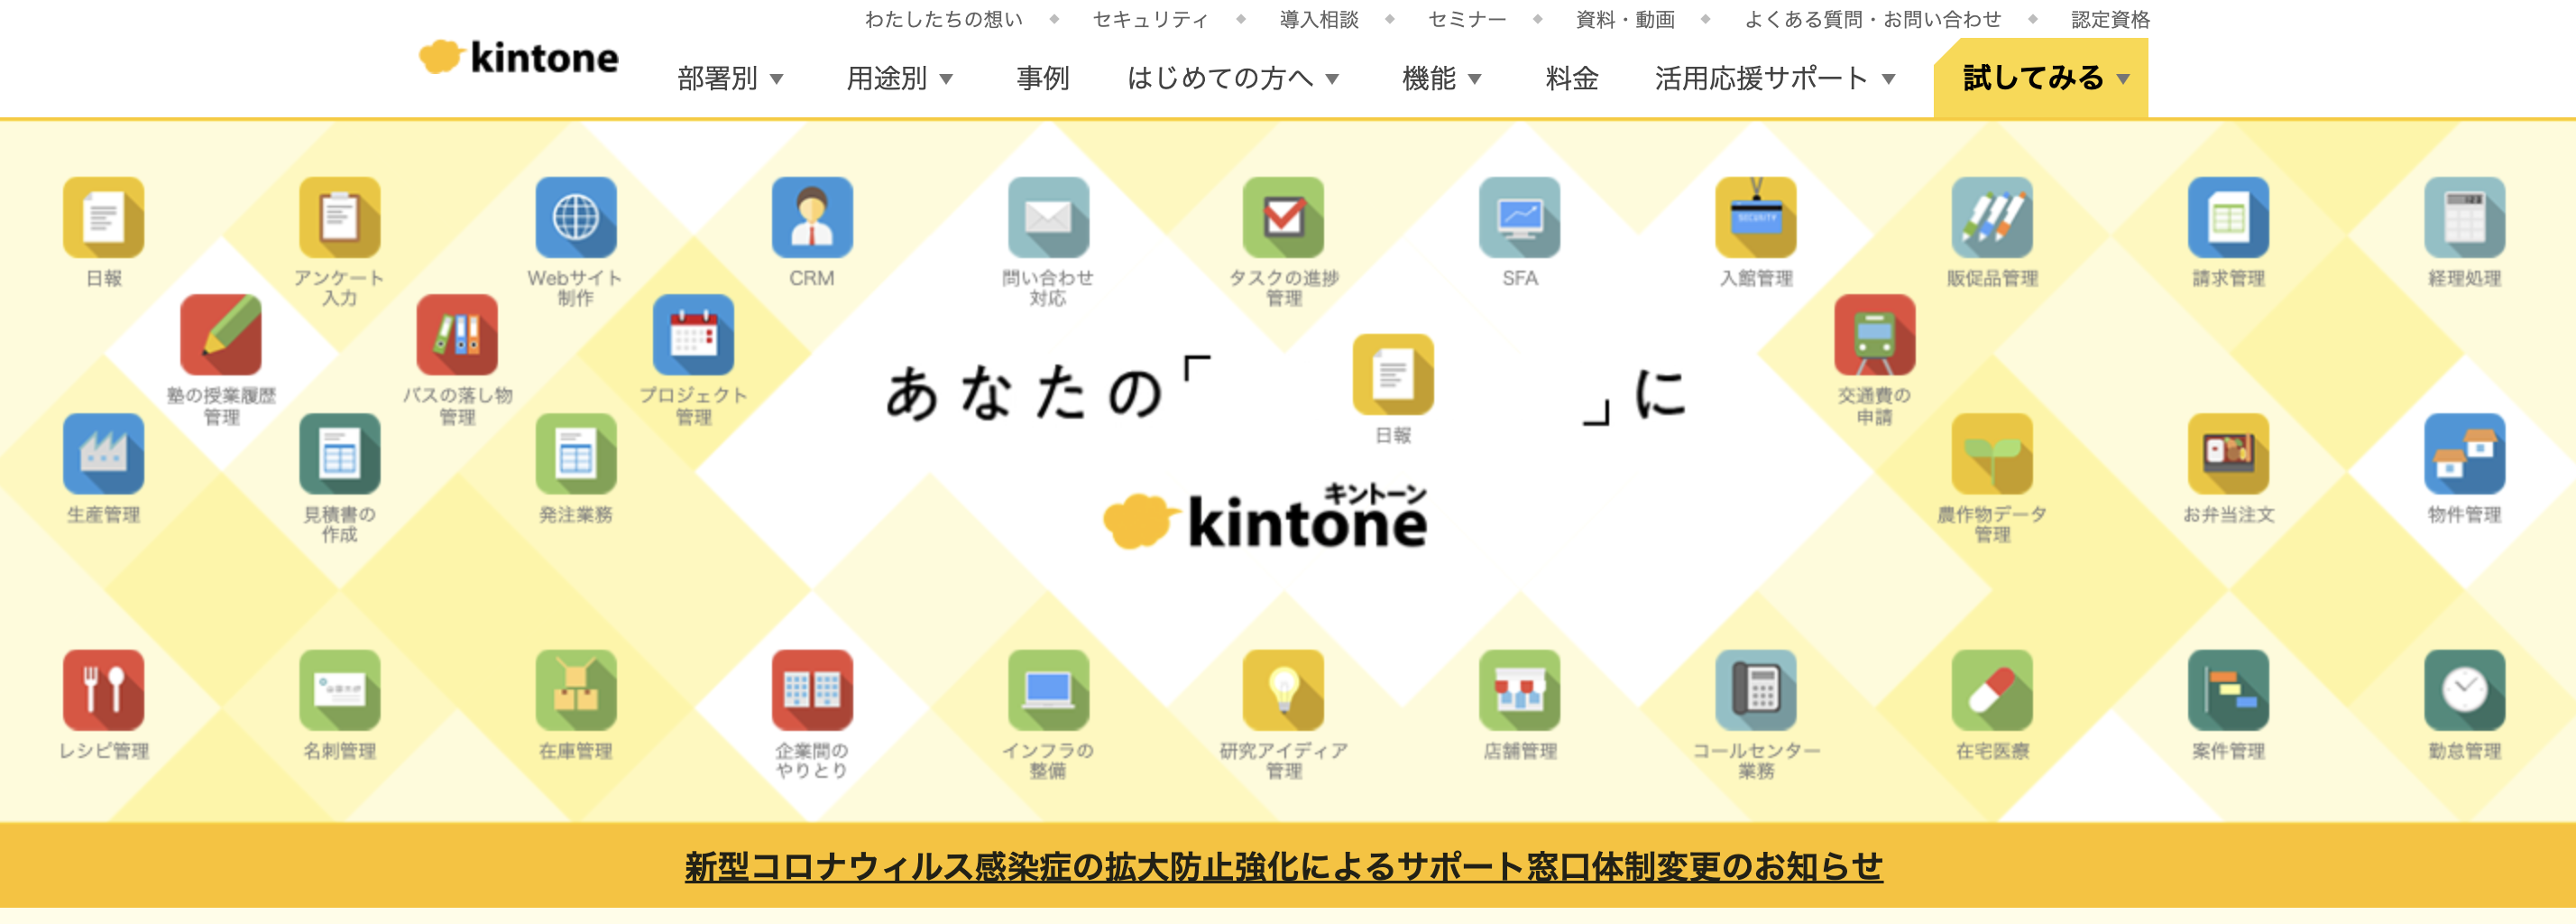 kintoneのイメージ画像